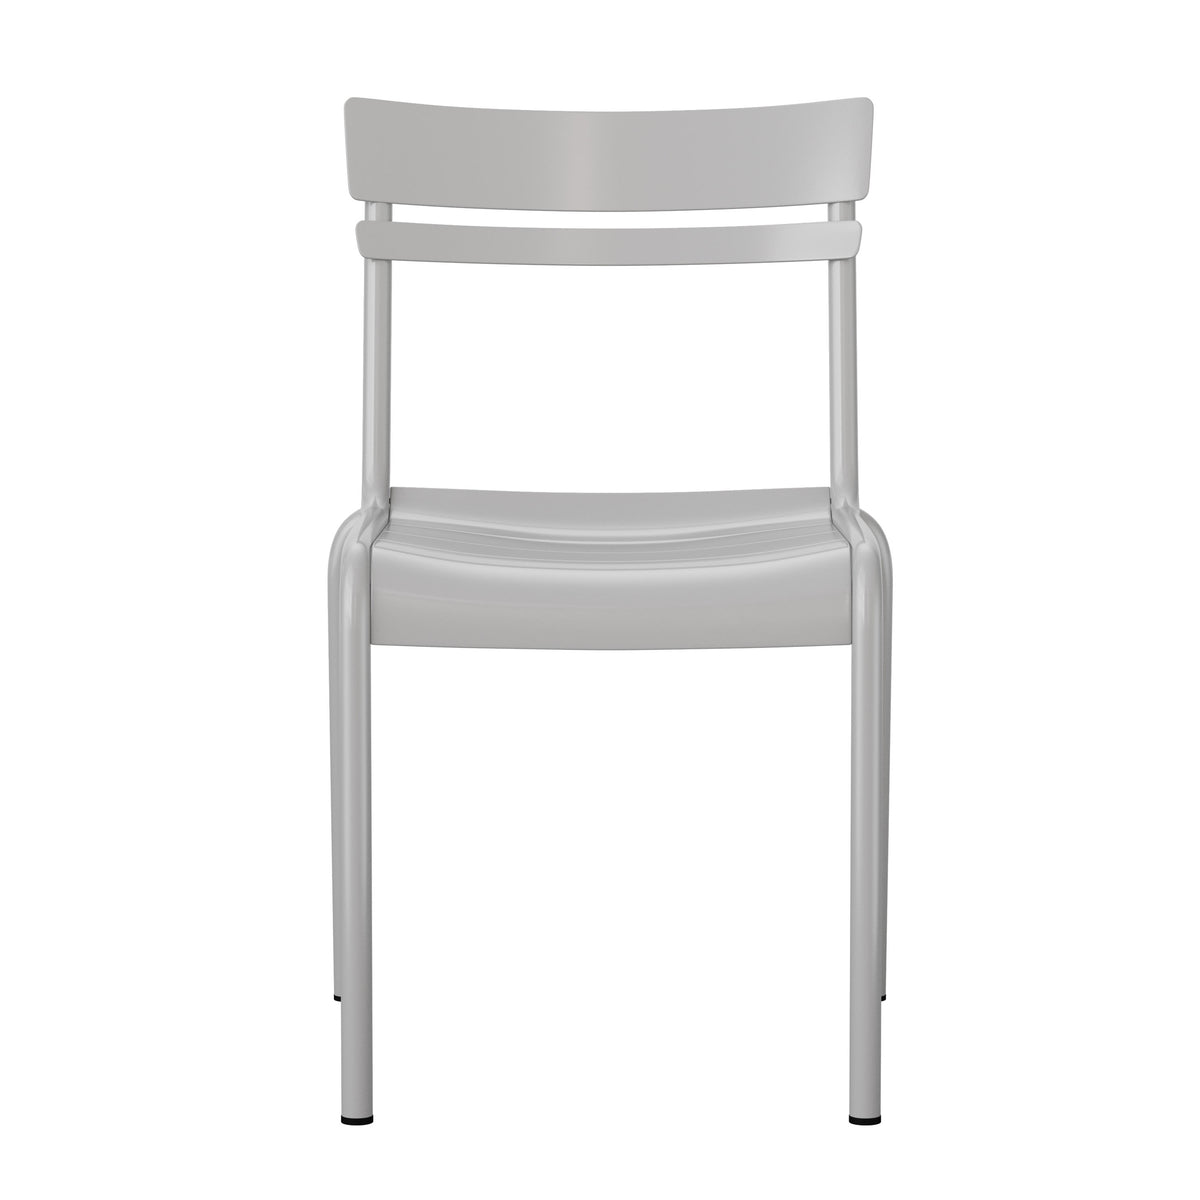 Silver |#| Modern Commercial Grade 2 Slat Indoor/Outdoor Steel Dining Chair in Quicksilver